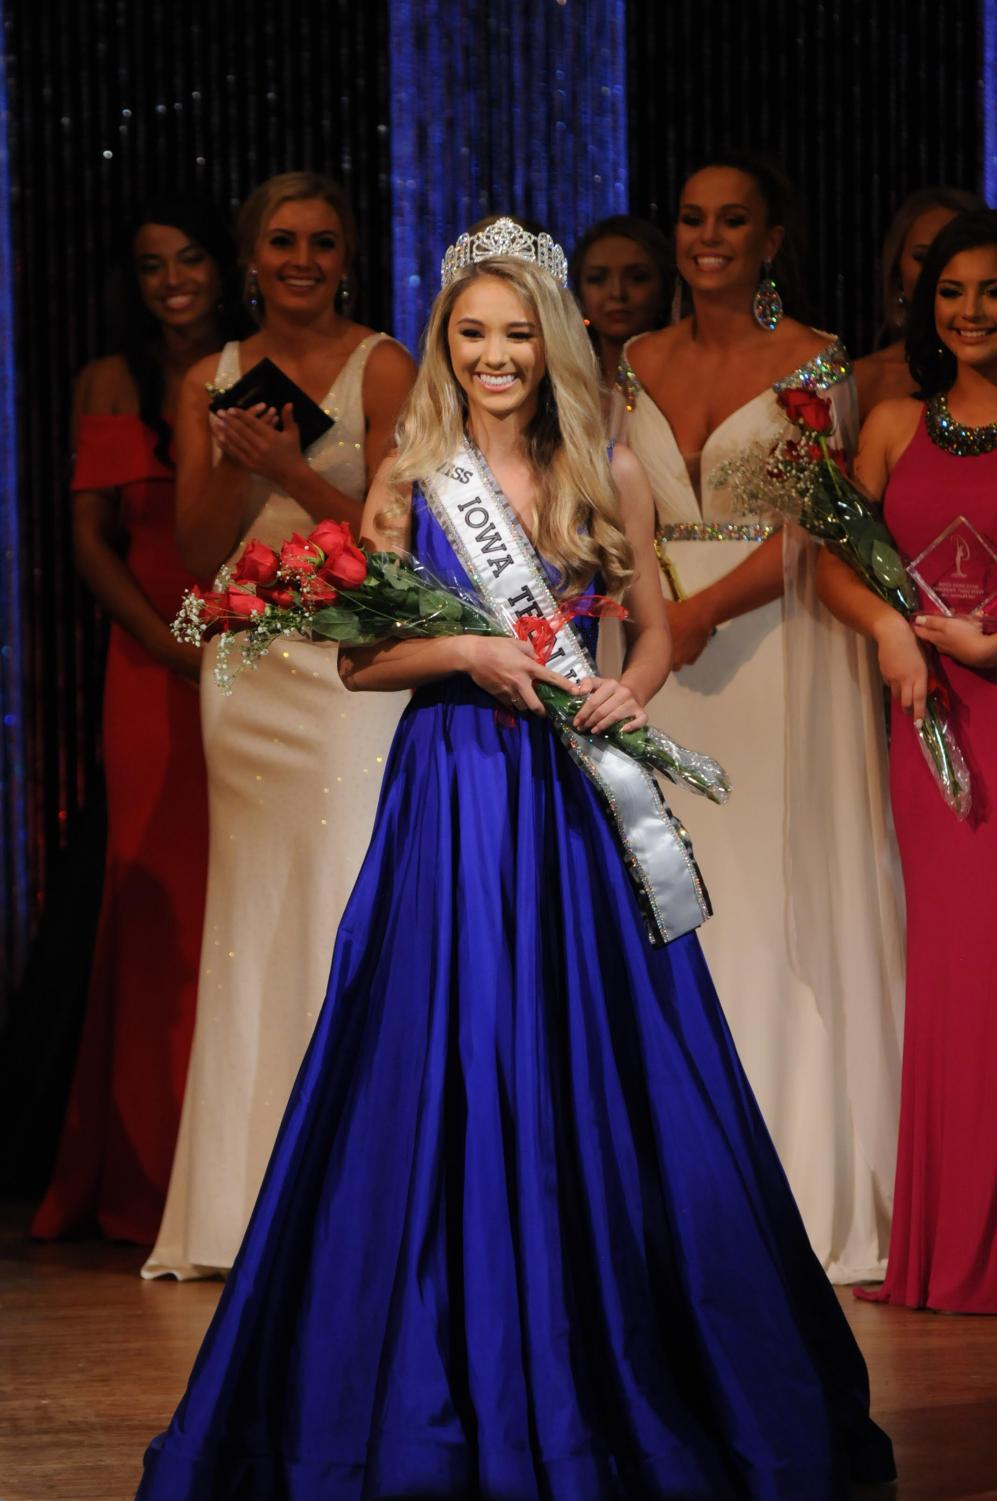 Saint crowned as Miss Teen Iowa 2019 – Xpress